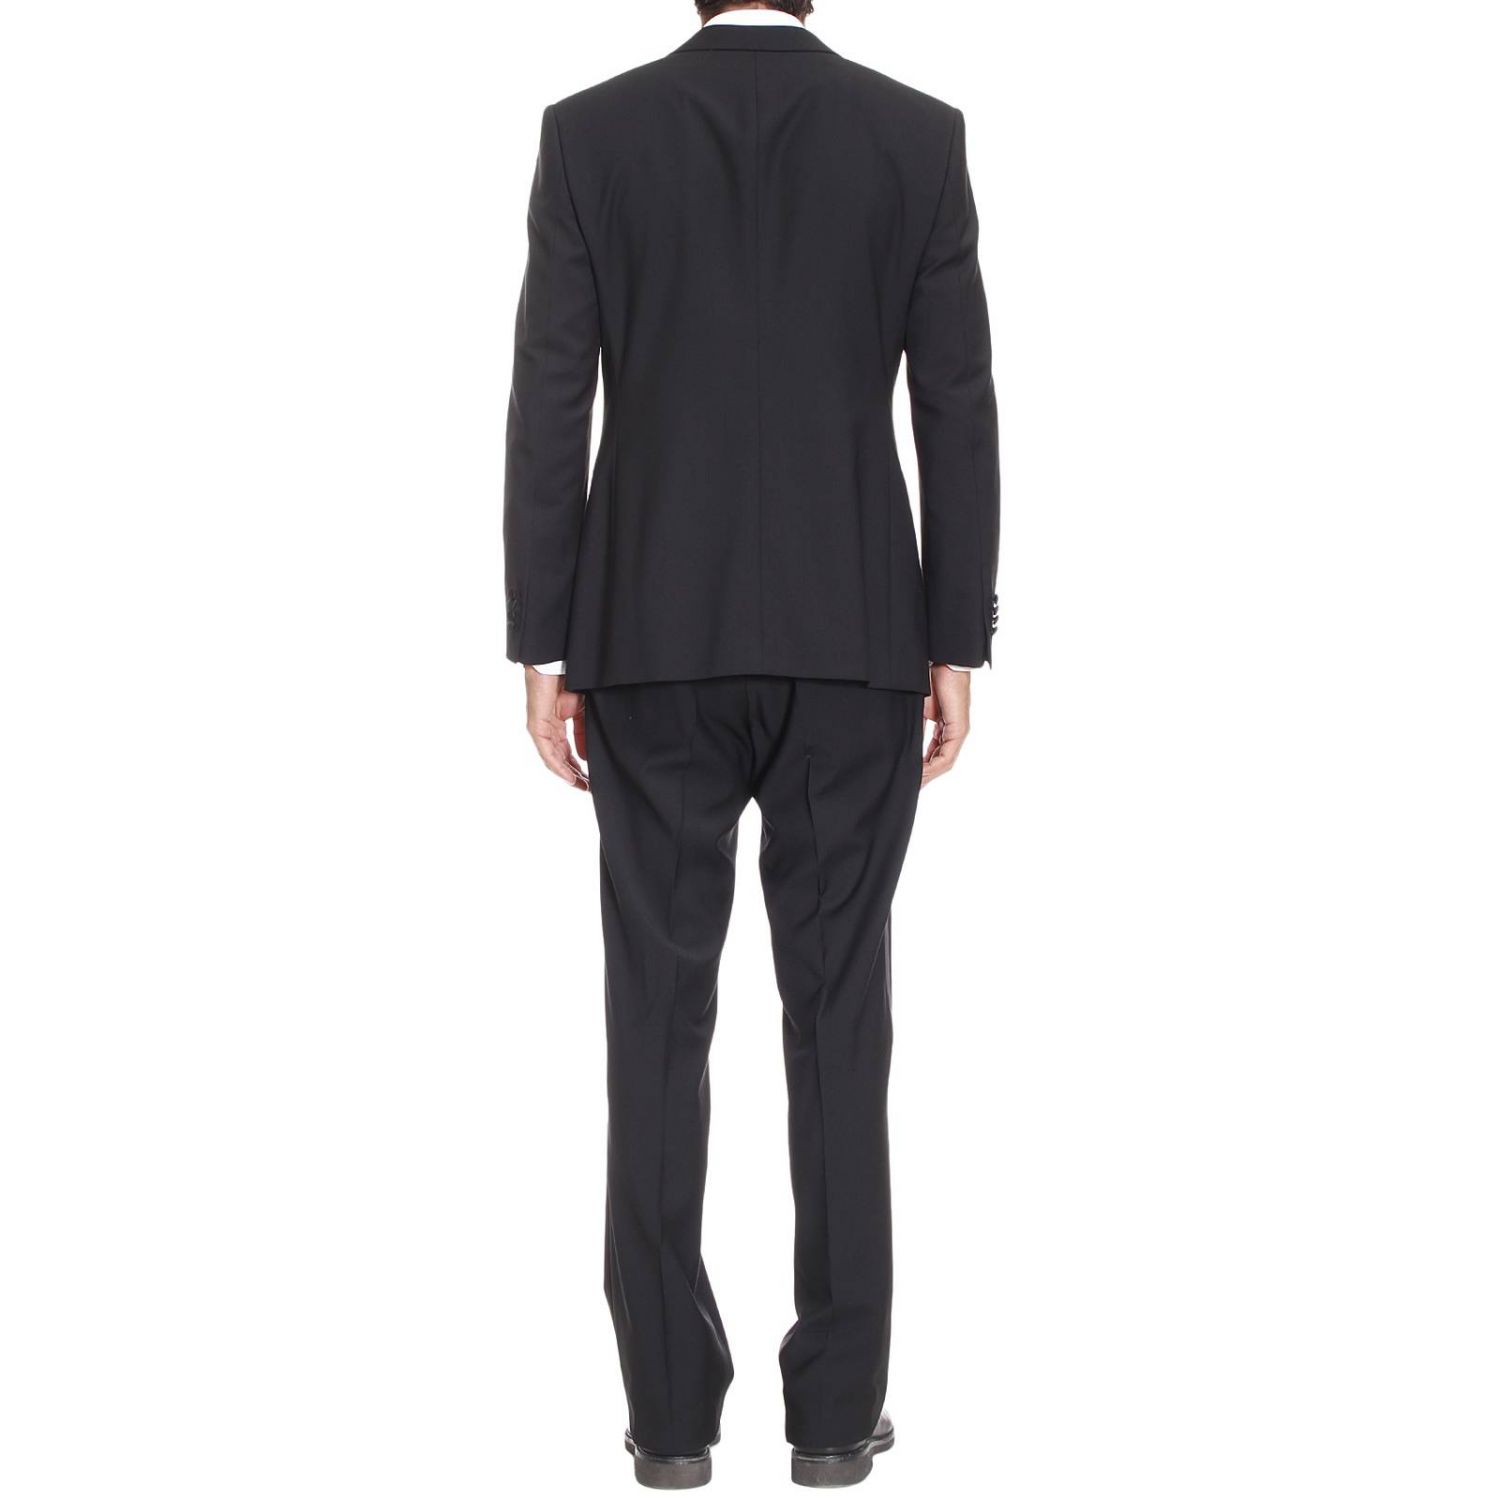 Giorgio Armani Outlet: Suits man | Suit Giorgio Armani Men Black | Suit ...